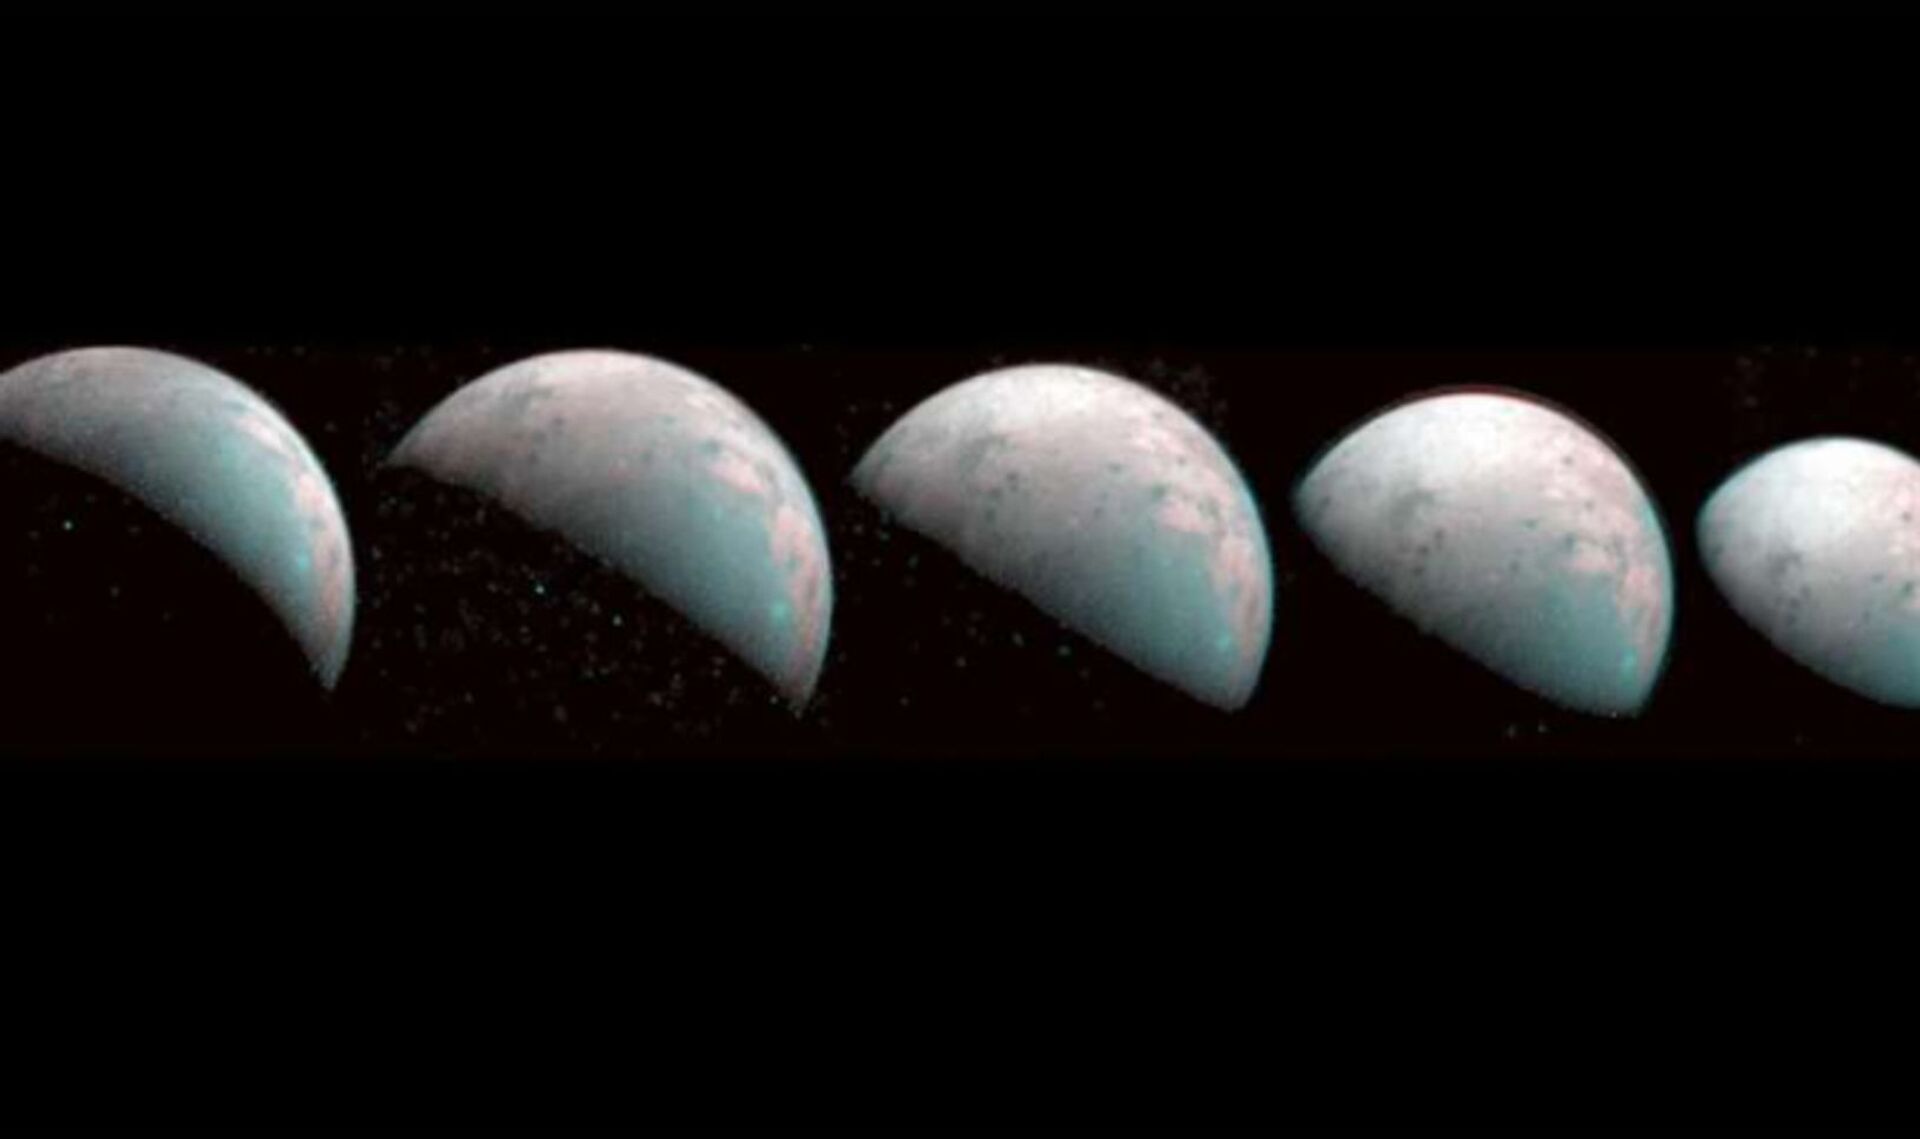 NASA Juno Images From Jovian Moon Revealed - Sputnik International, 1920, 15.12.2022